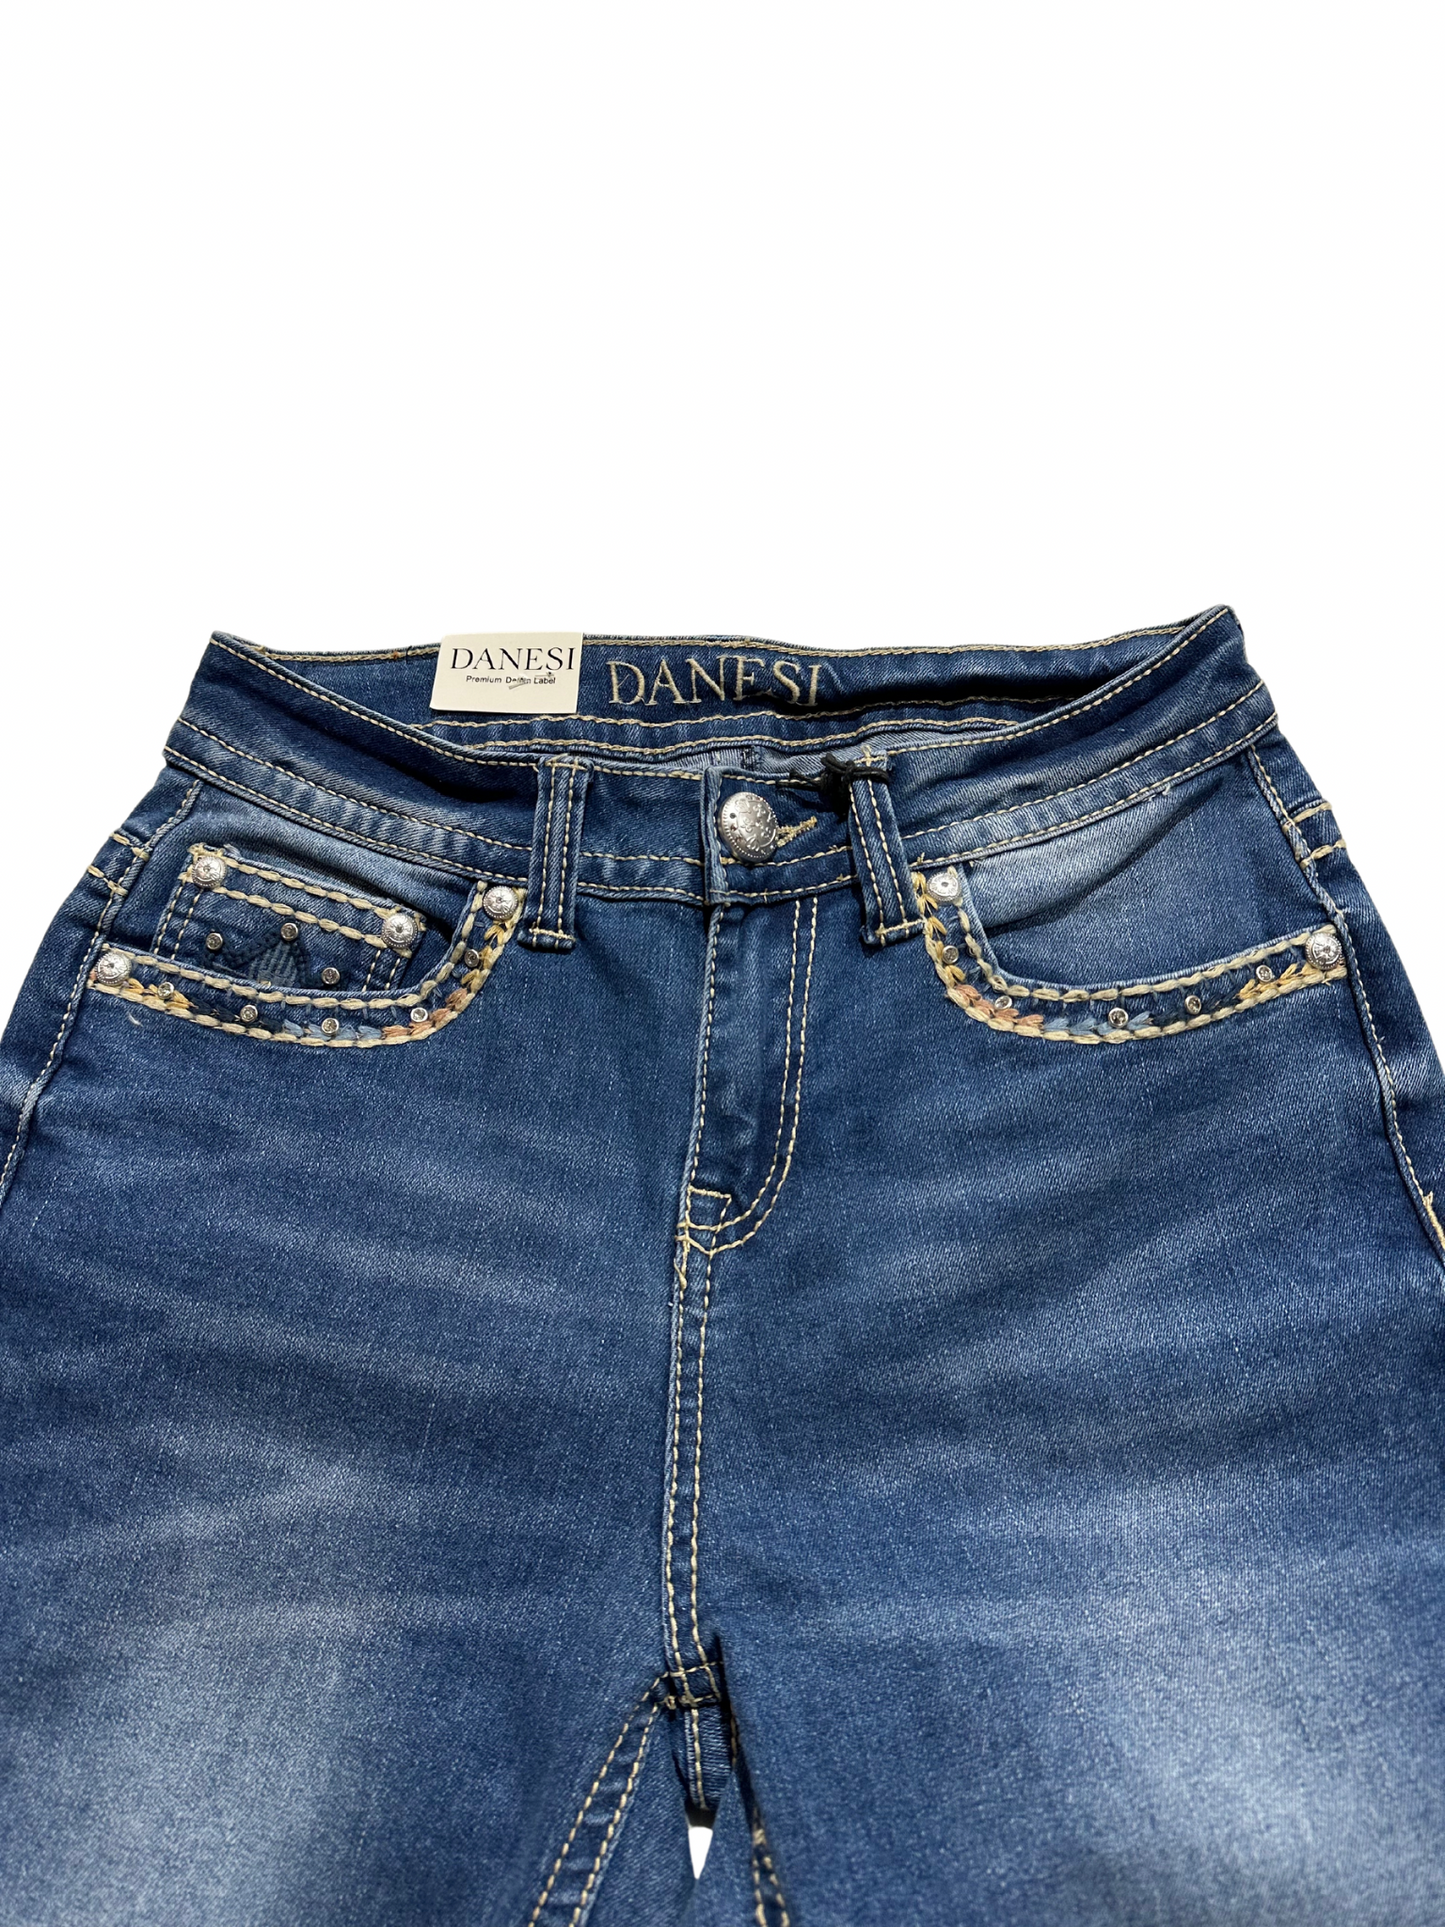 Danesi Medium Blue Bling Pocket Bootcut Jean